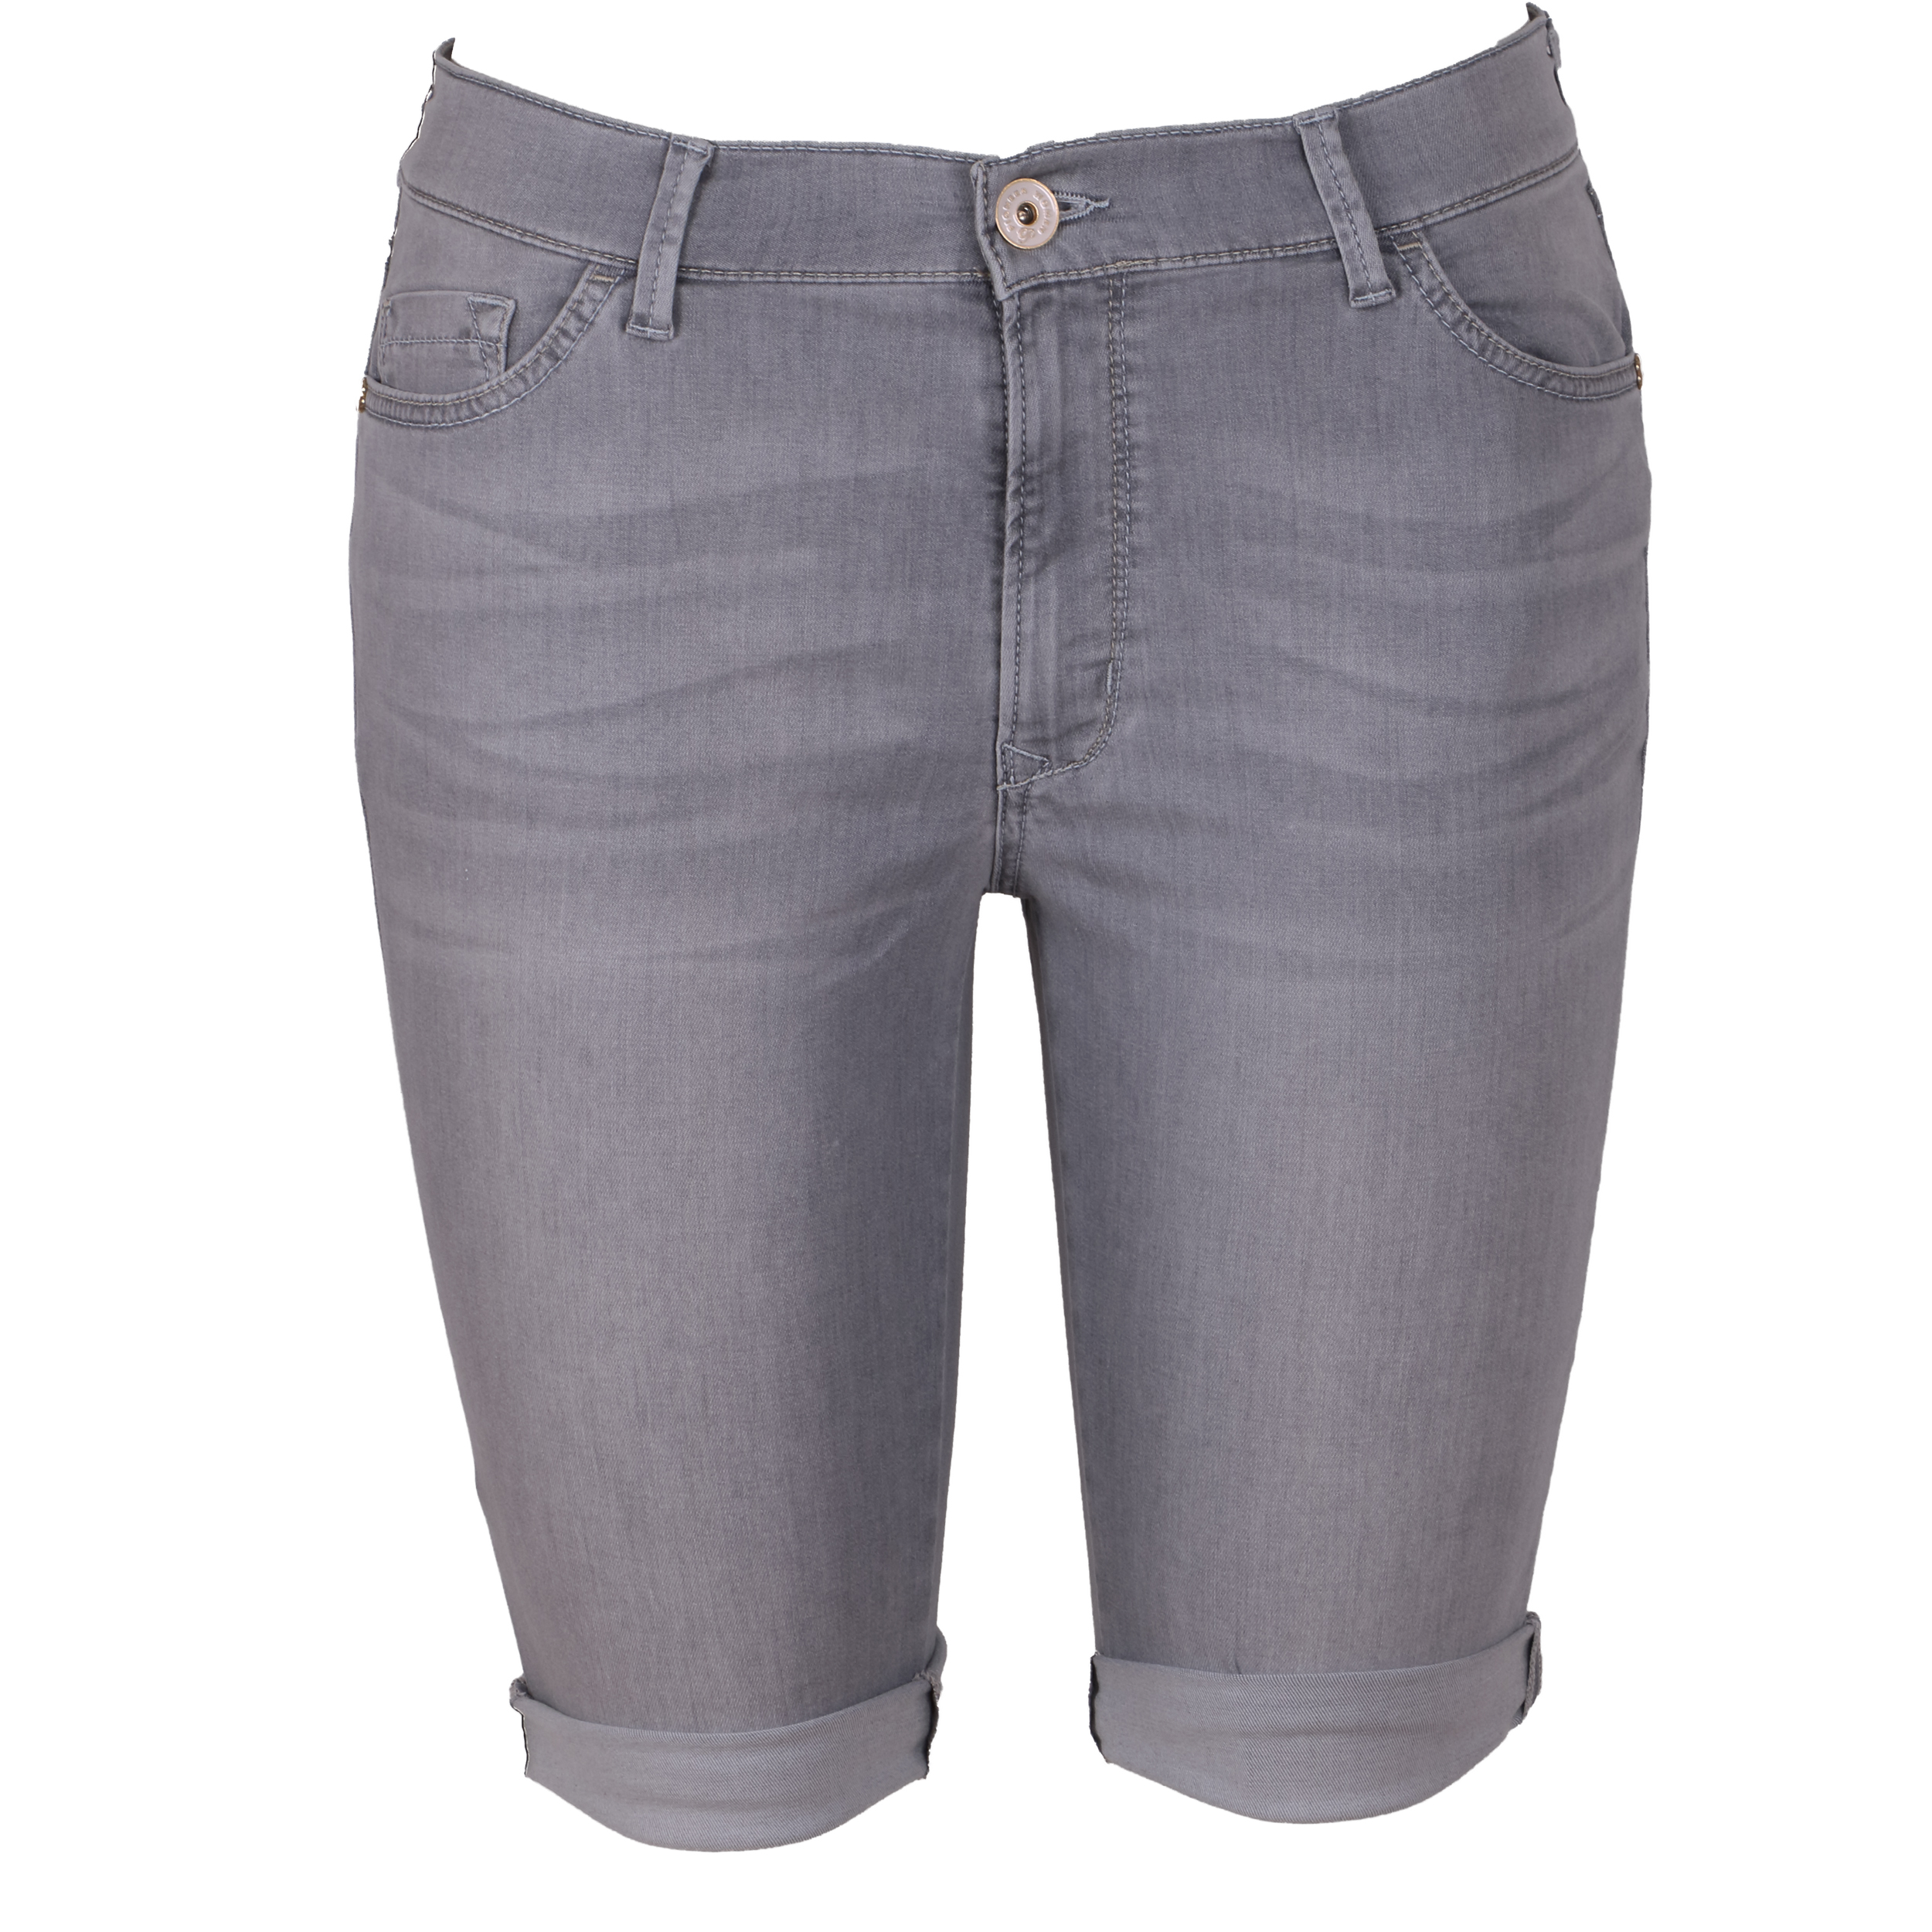 Pioneer Damen Jeans-Shorts 42 grau